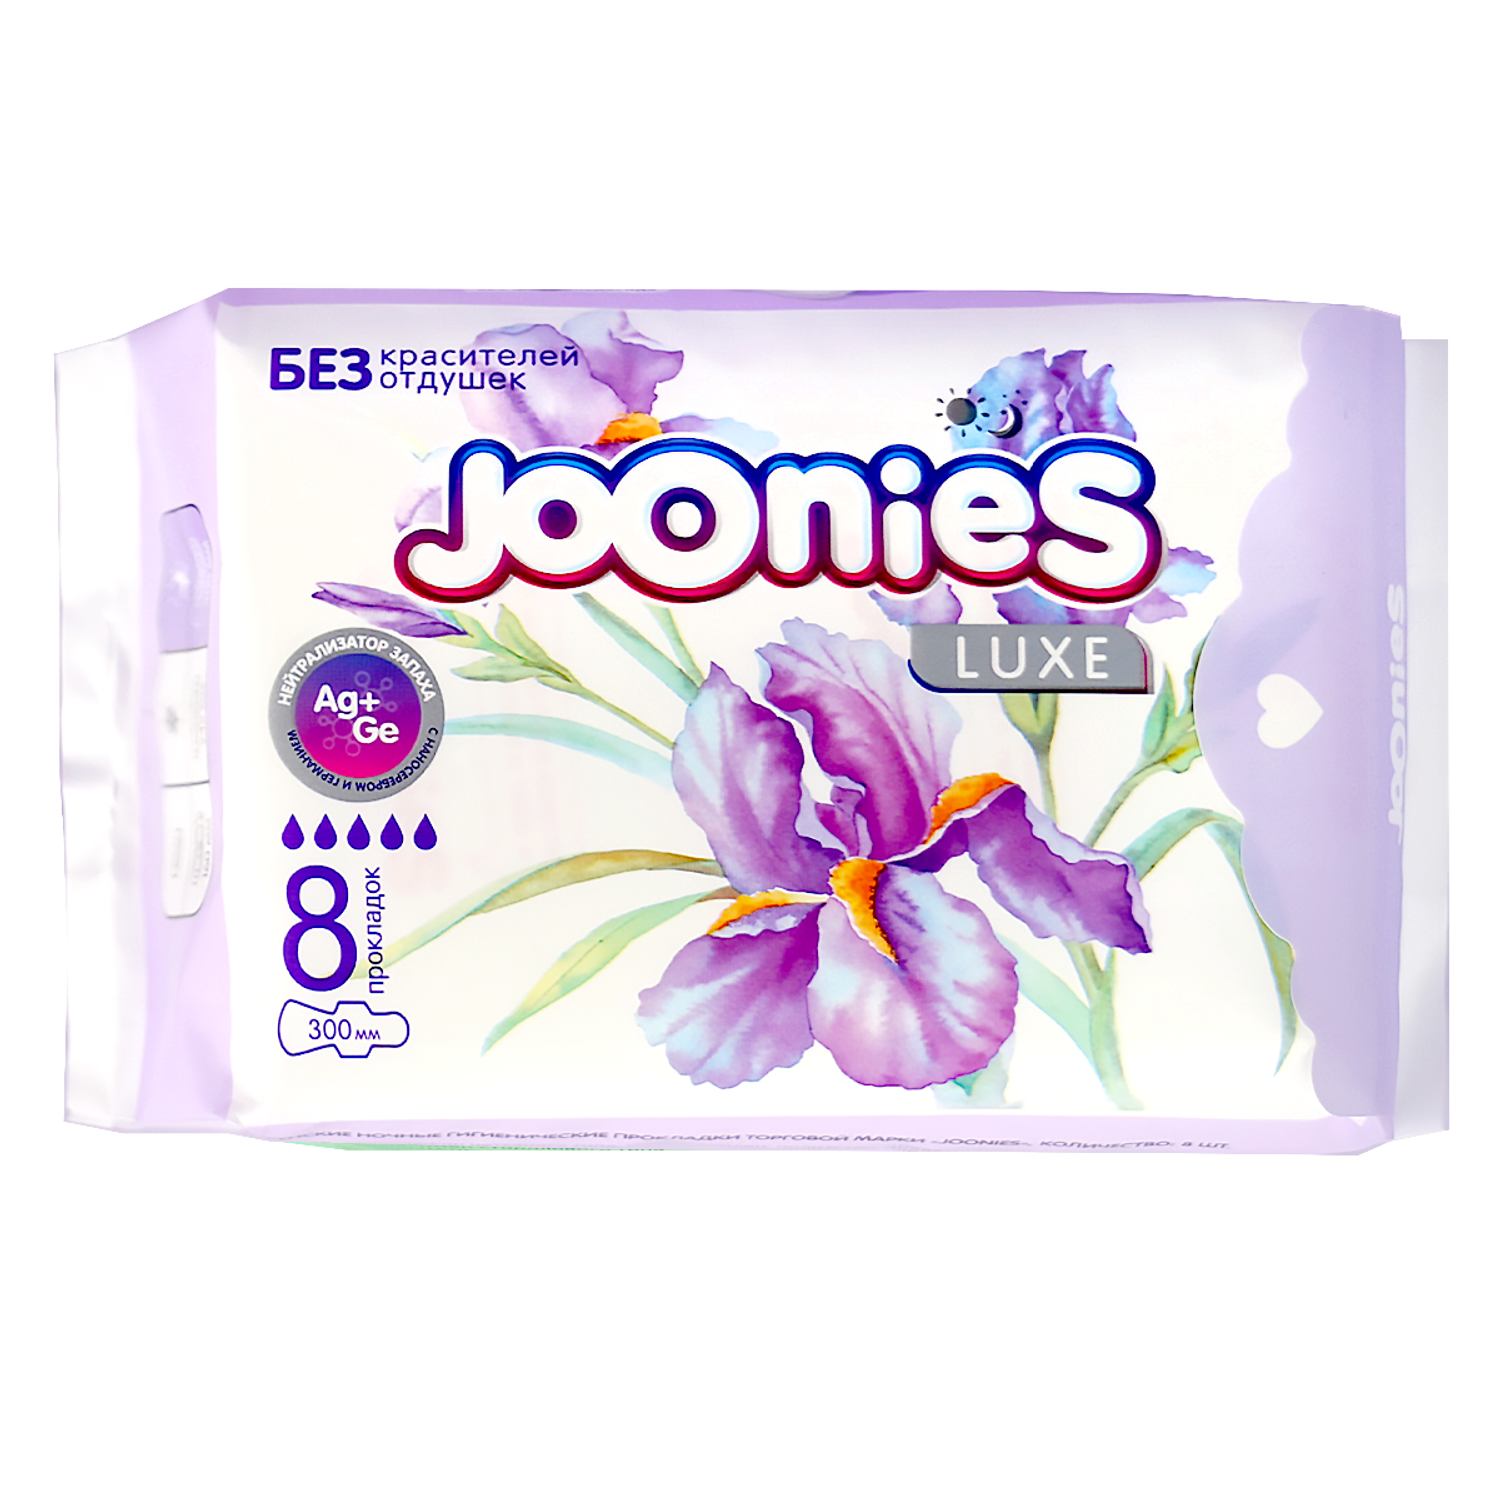 Прокладки Joonies Luxe ночные 8шт - фото 1